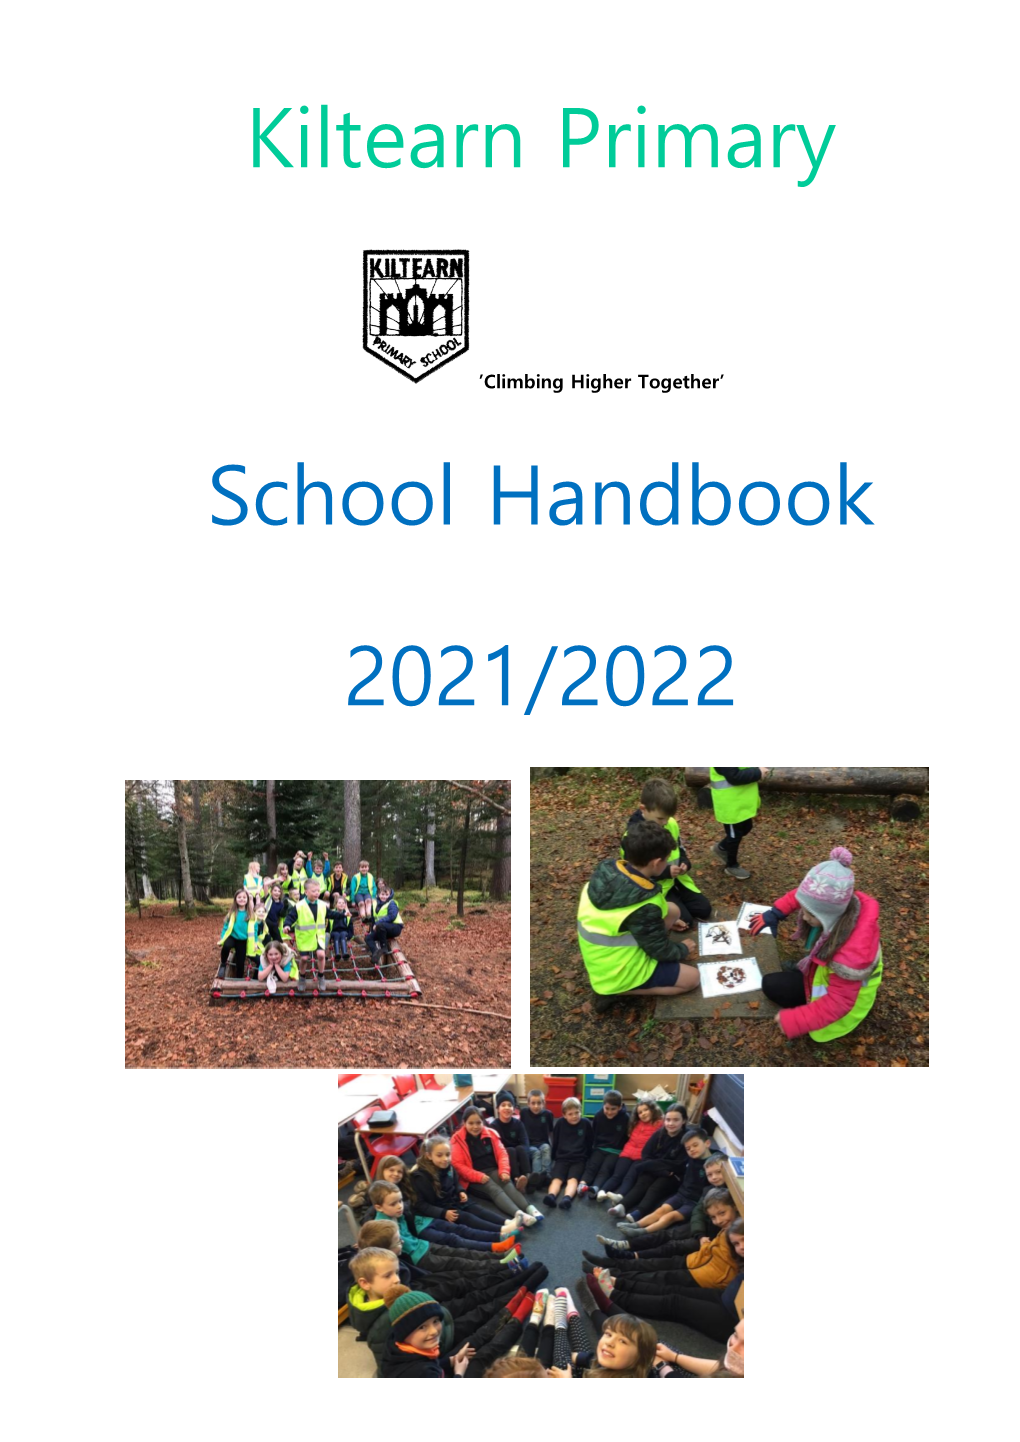 Kiltearn Primary School Handbook 2021/2022